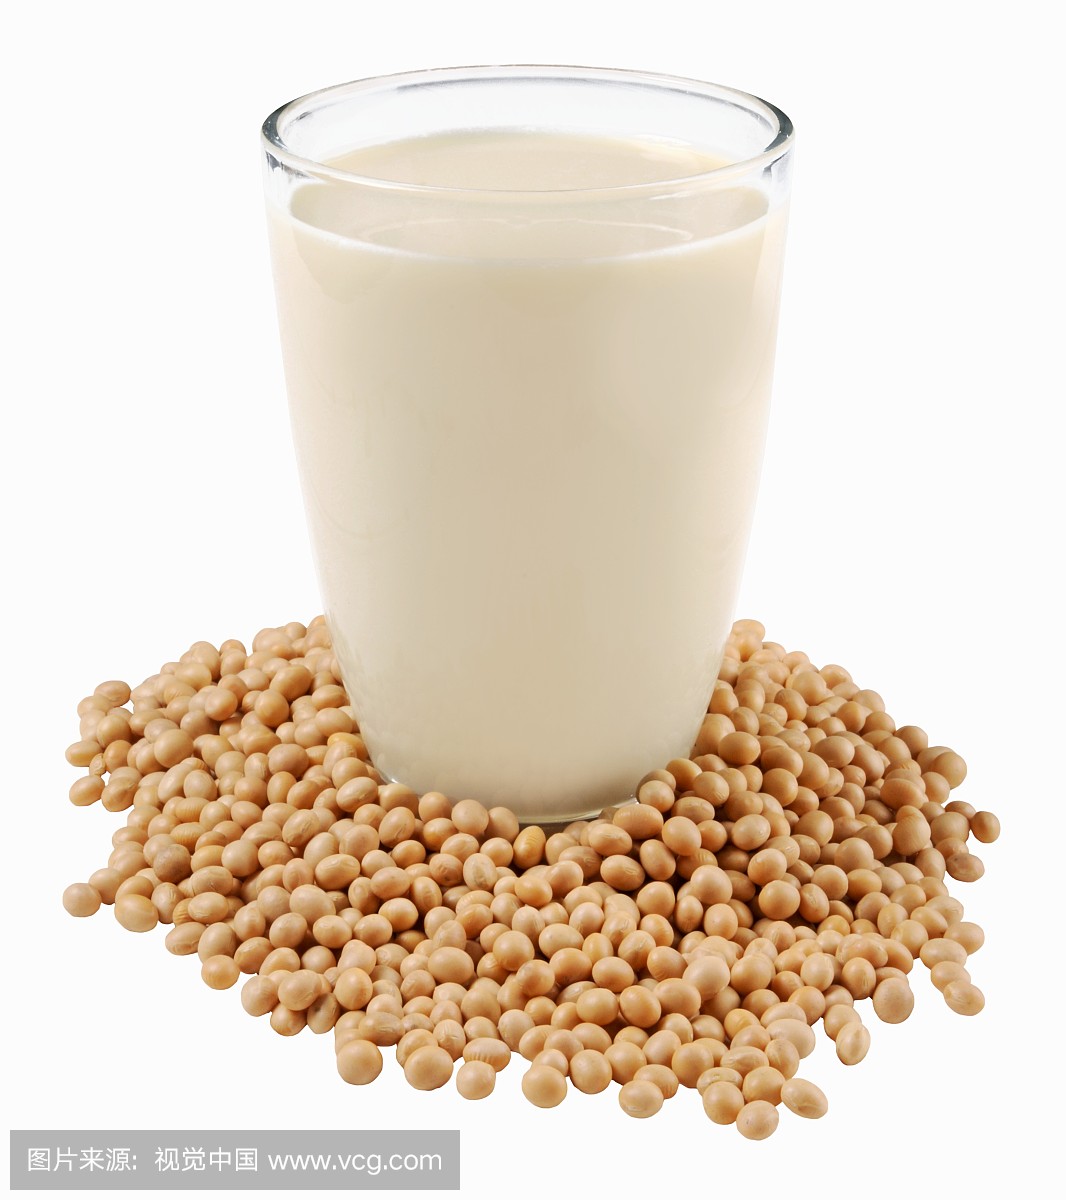 A glass of soya milk on soya beans